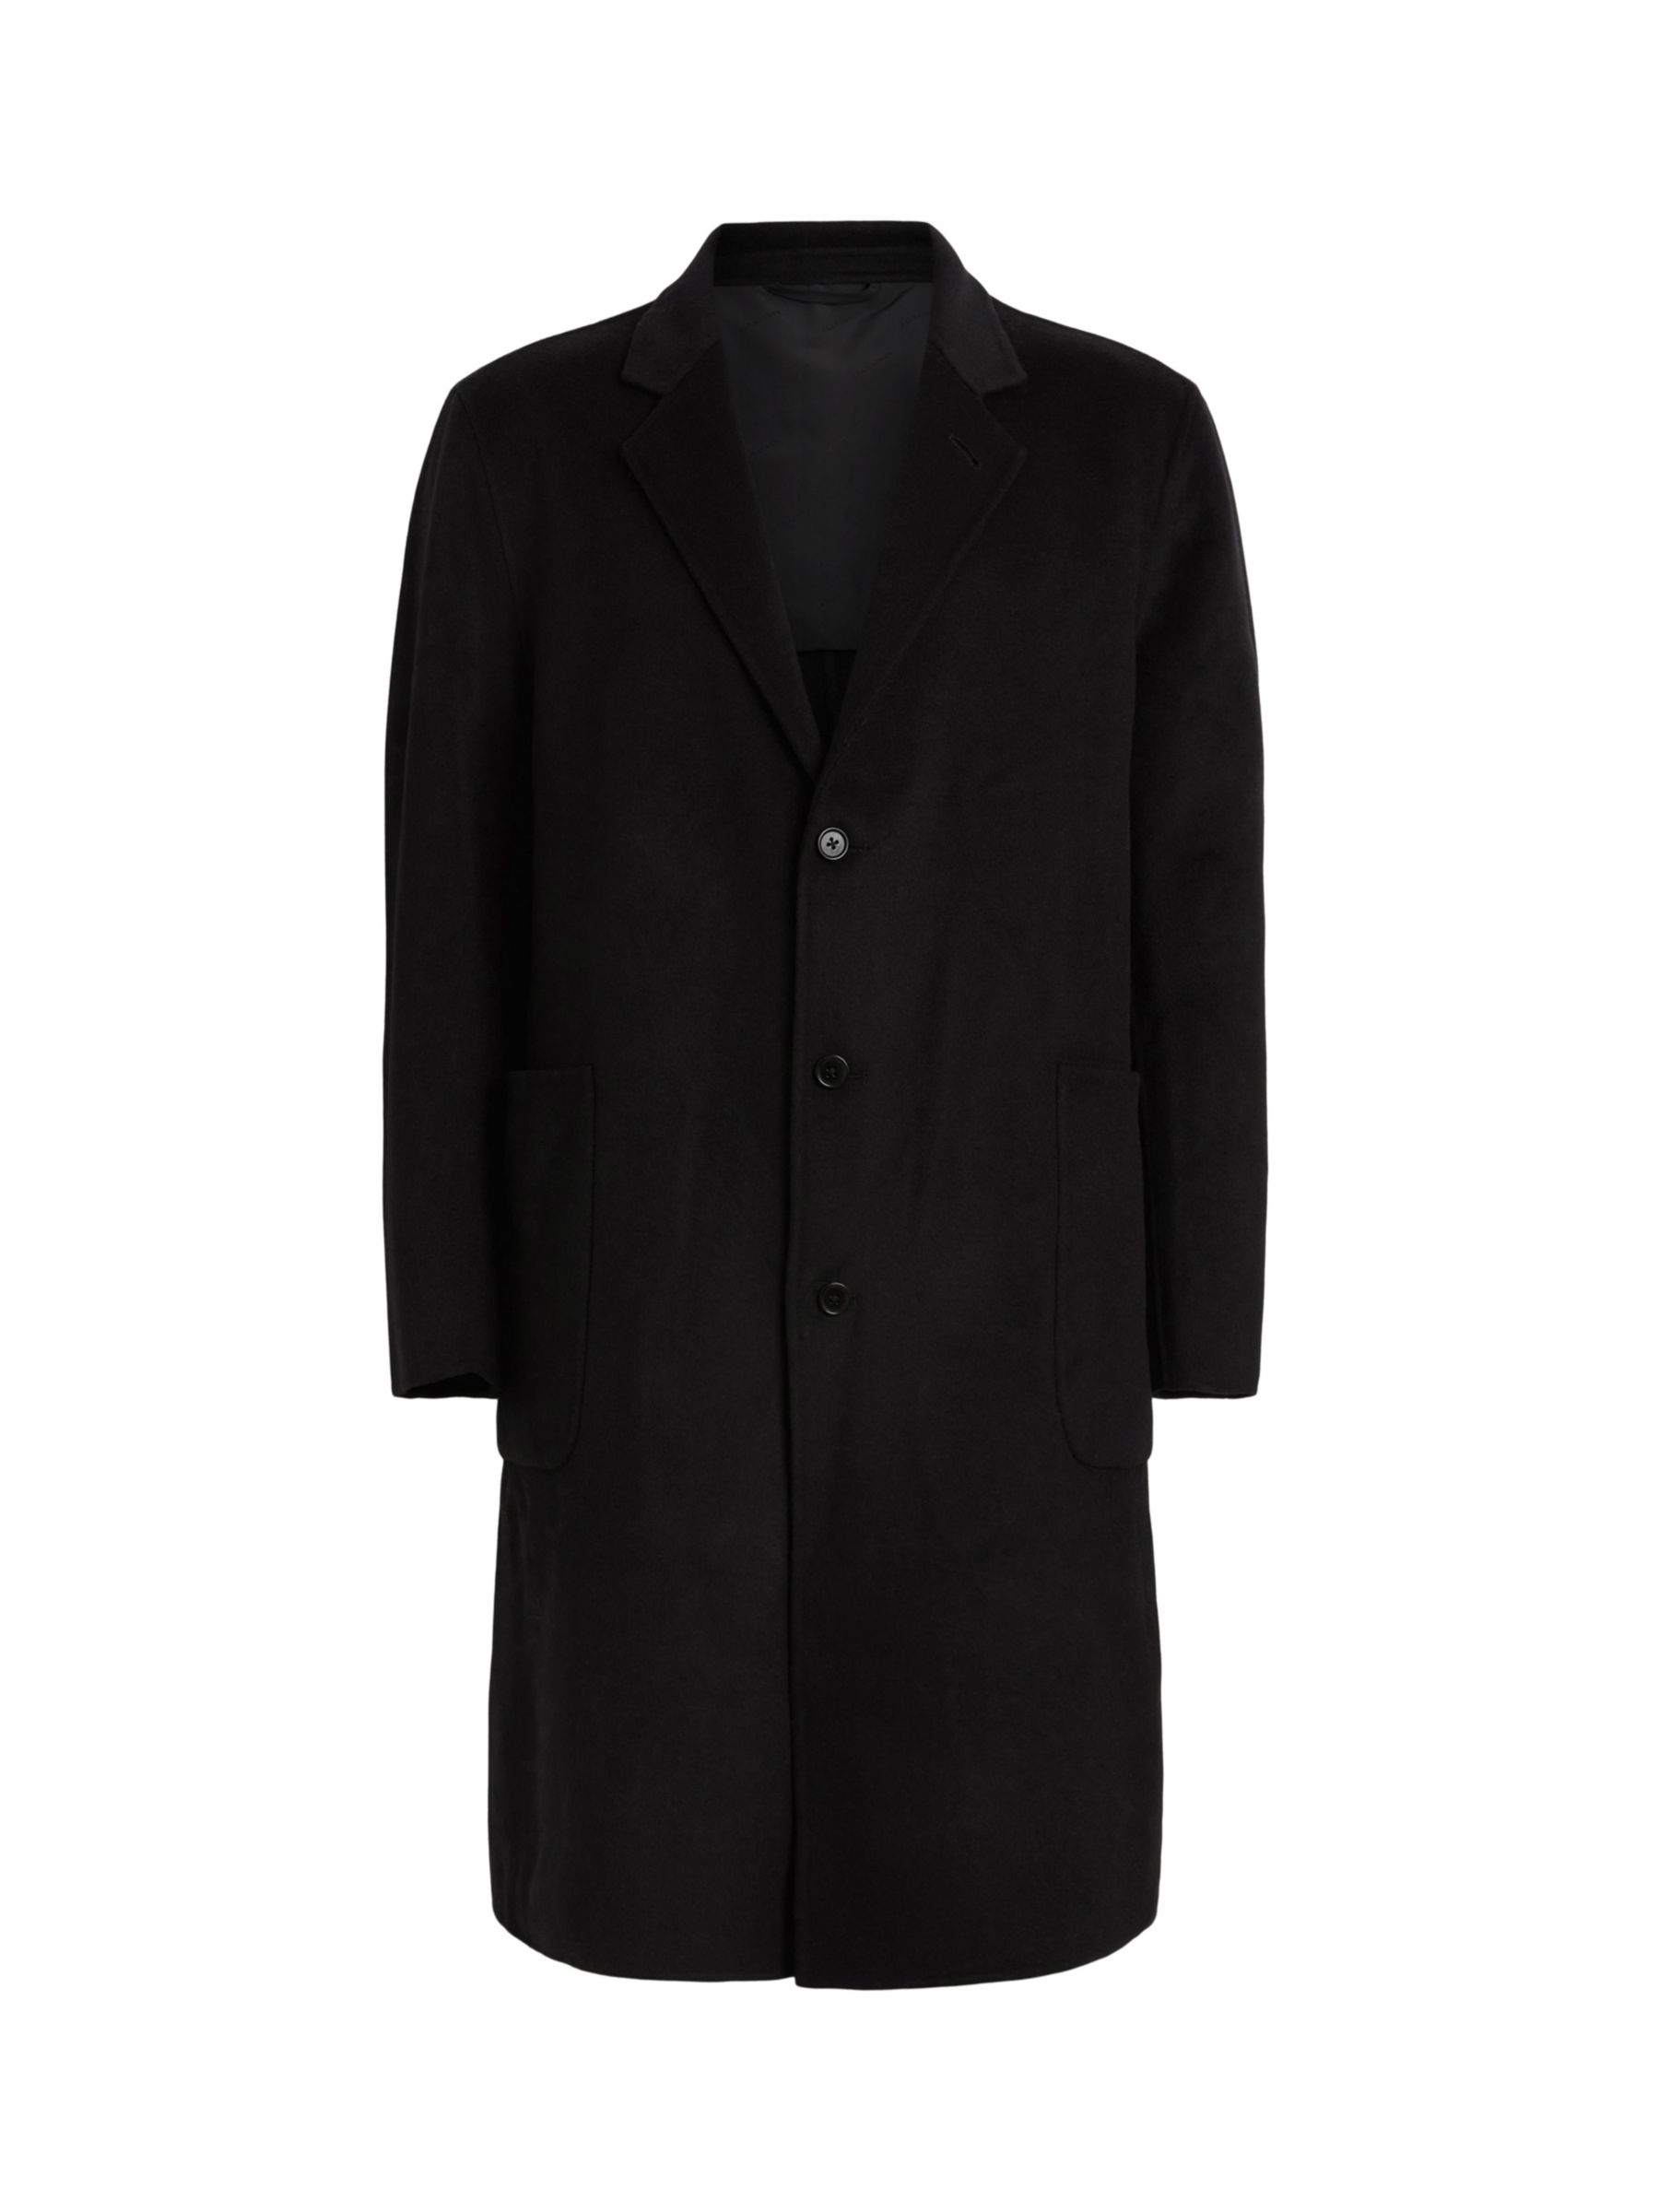 AllSaints Stano Oversize Wool Blend Coat, Black at John Lewis & Partners